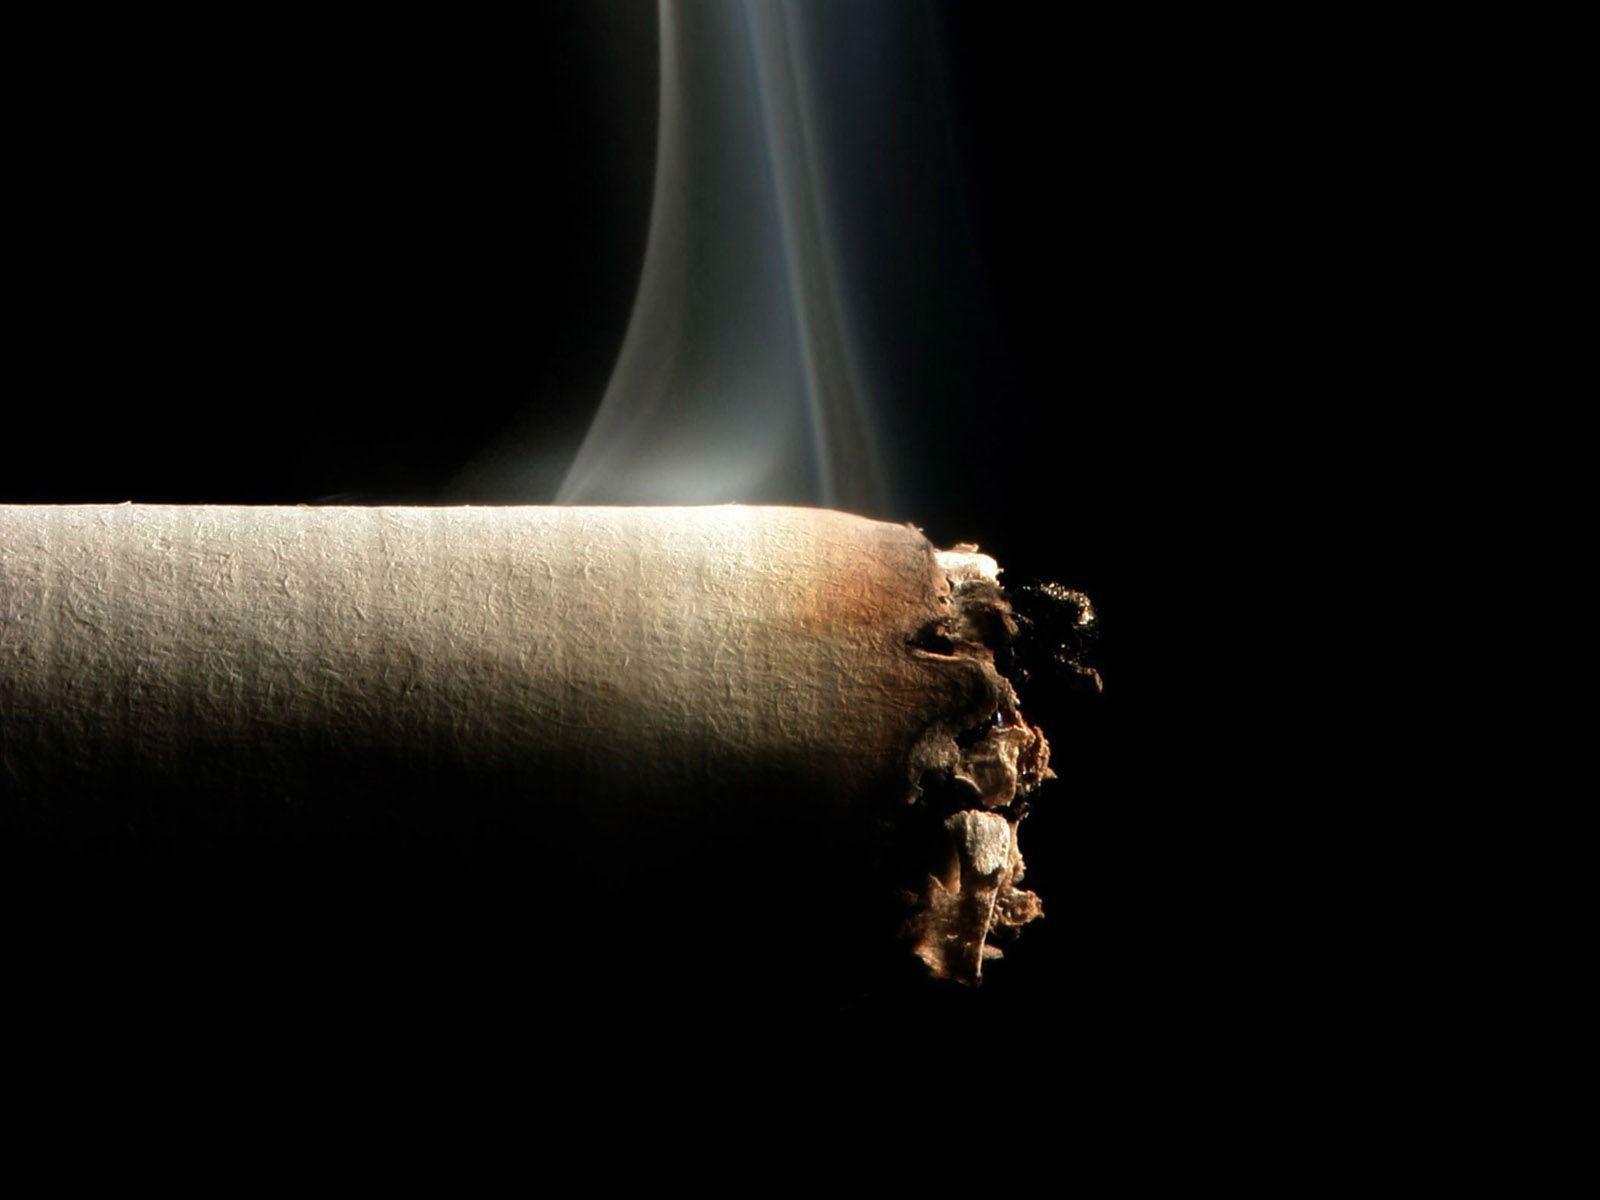 Free Download Nice Cigarette Smoke Image